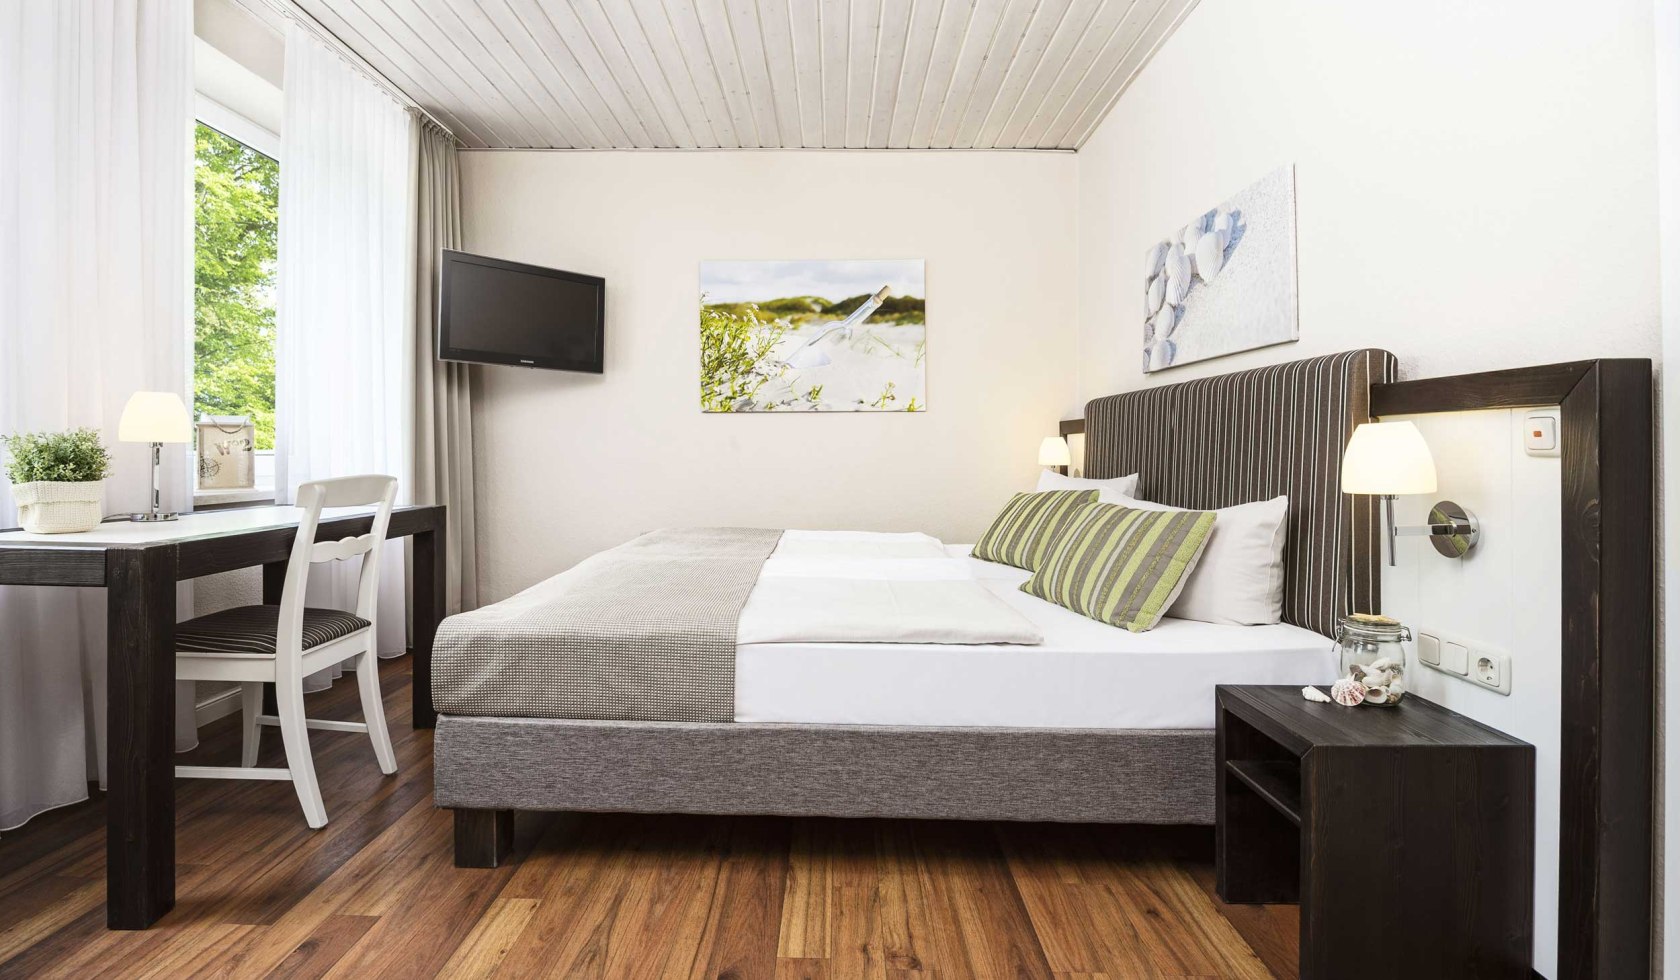 Doppelzimmer, © Hotel Hinrichs, Jan Hinrichs / Thorsten Schmidtkord